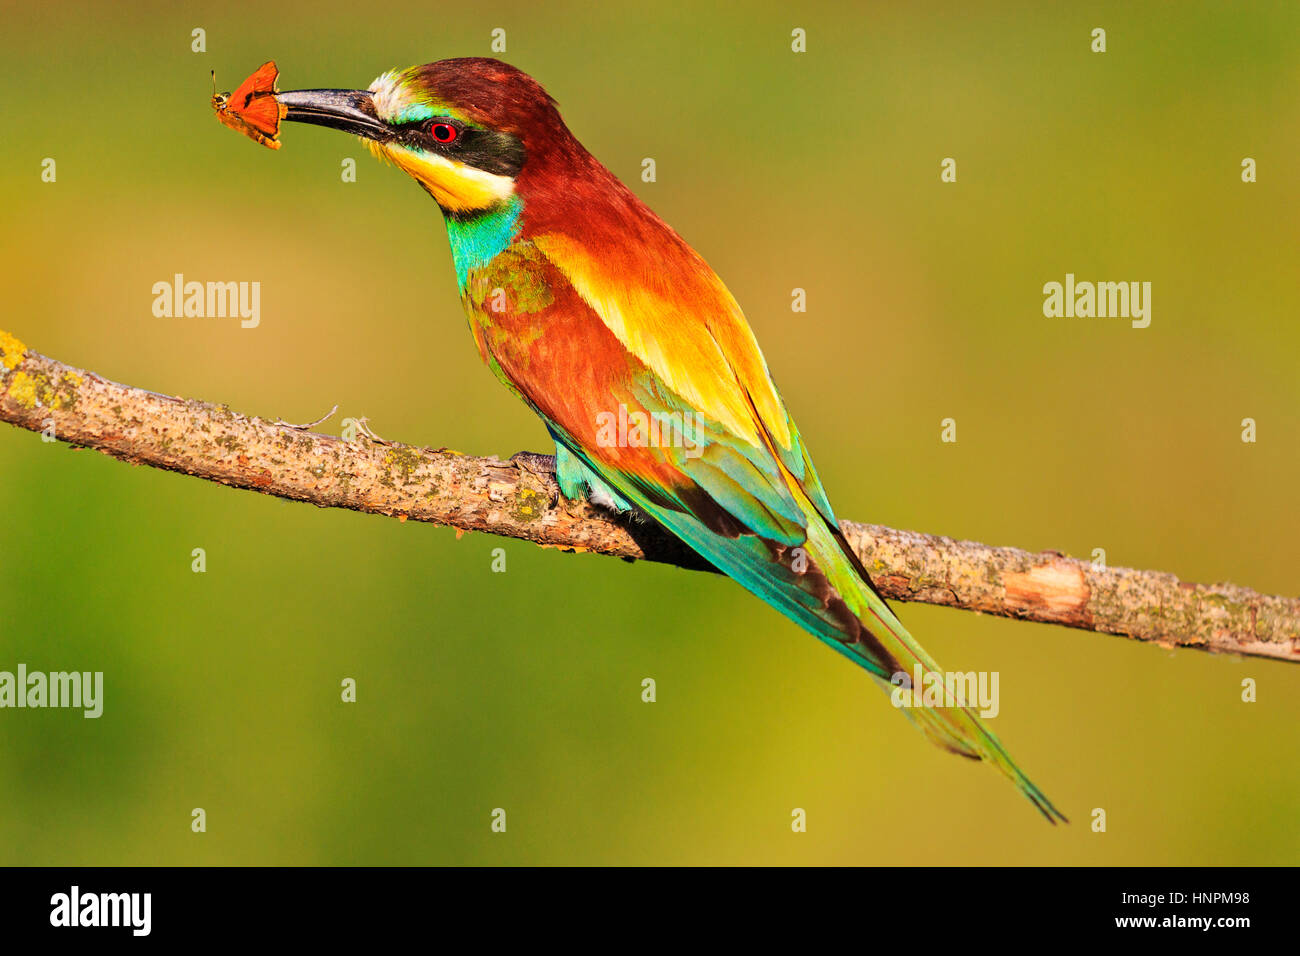 Ave color arcoiris con mariposa amarilla de insectos, aves tropicales, hermosas aves, desierto, hermosos Foto de stock